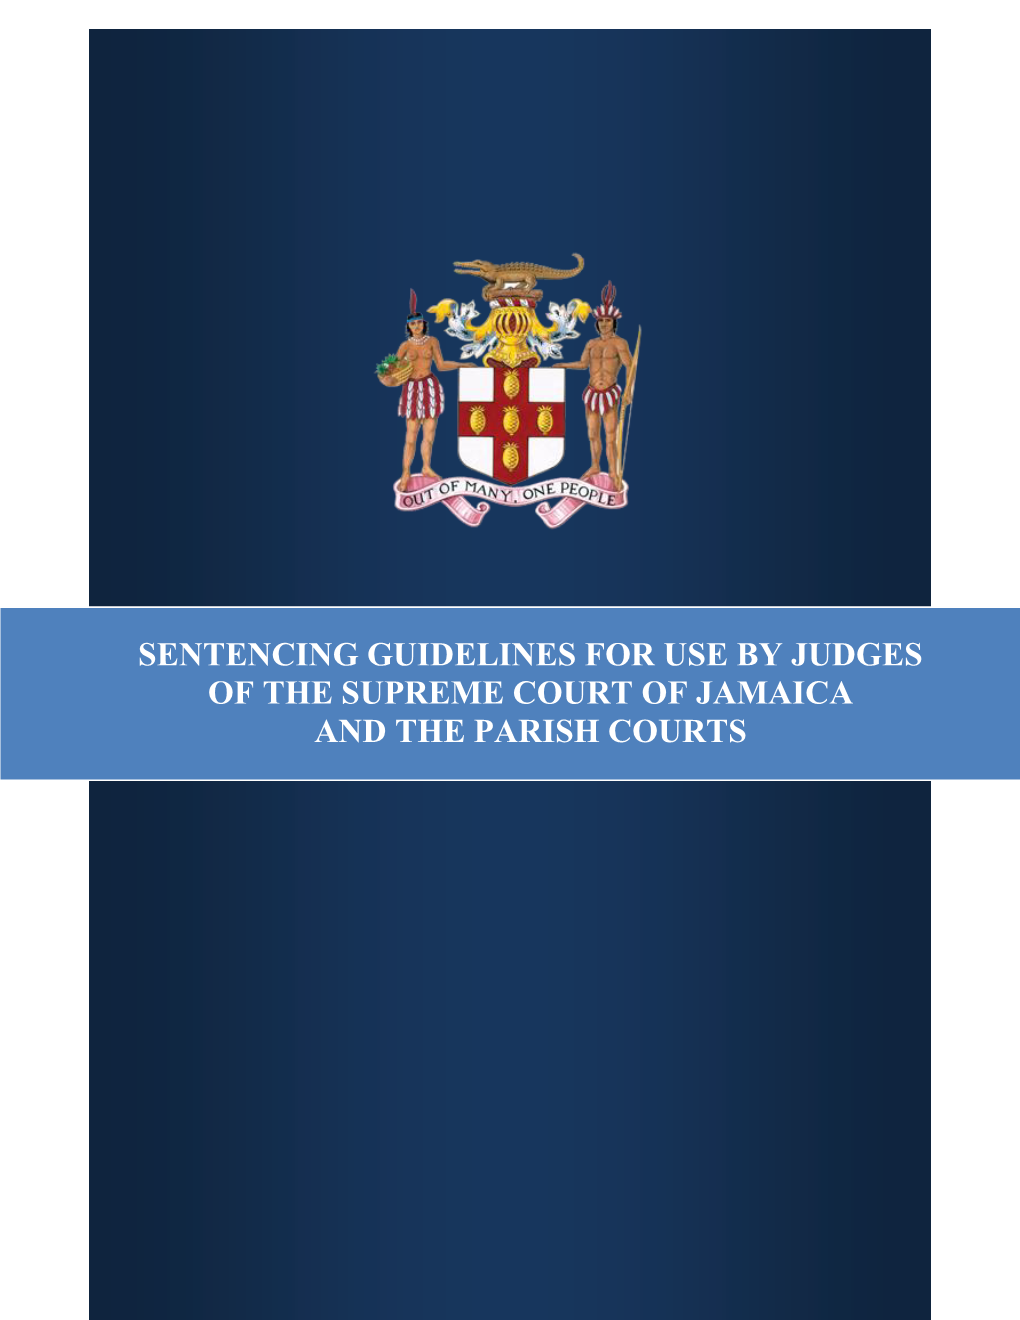 Download Jamaica Sentencing Guidelines.Pdf